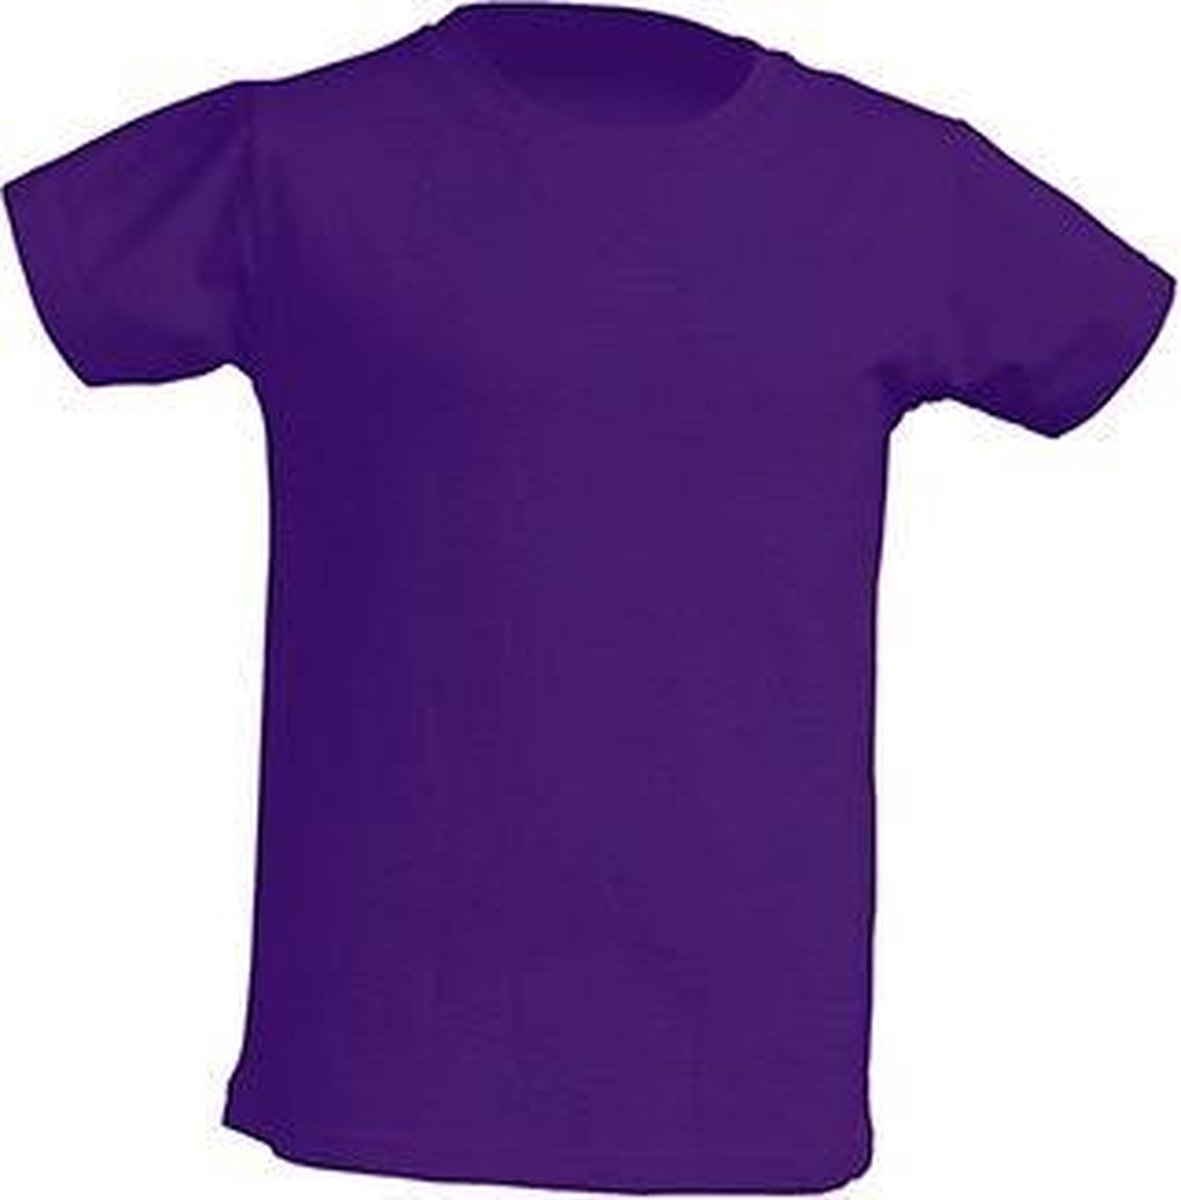 JHK Kinder t-shirt in Paars maat 3-4 jaar (104) - set van 5 stuks